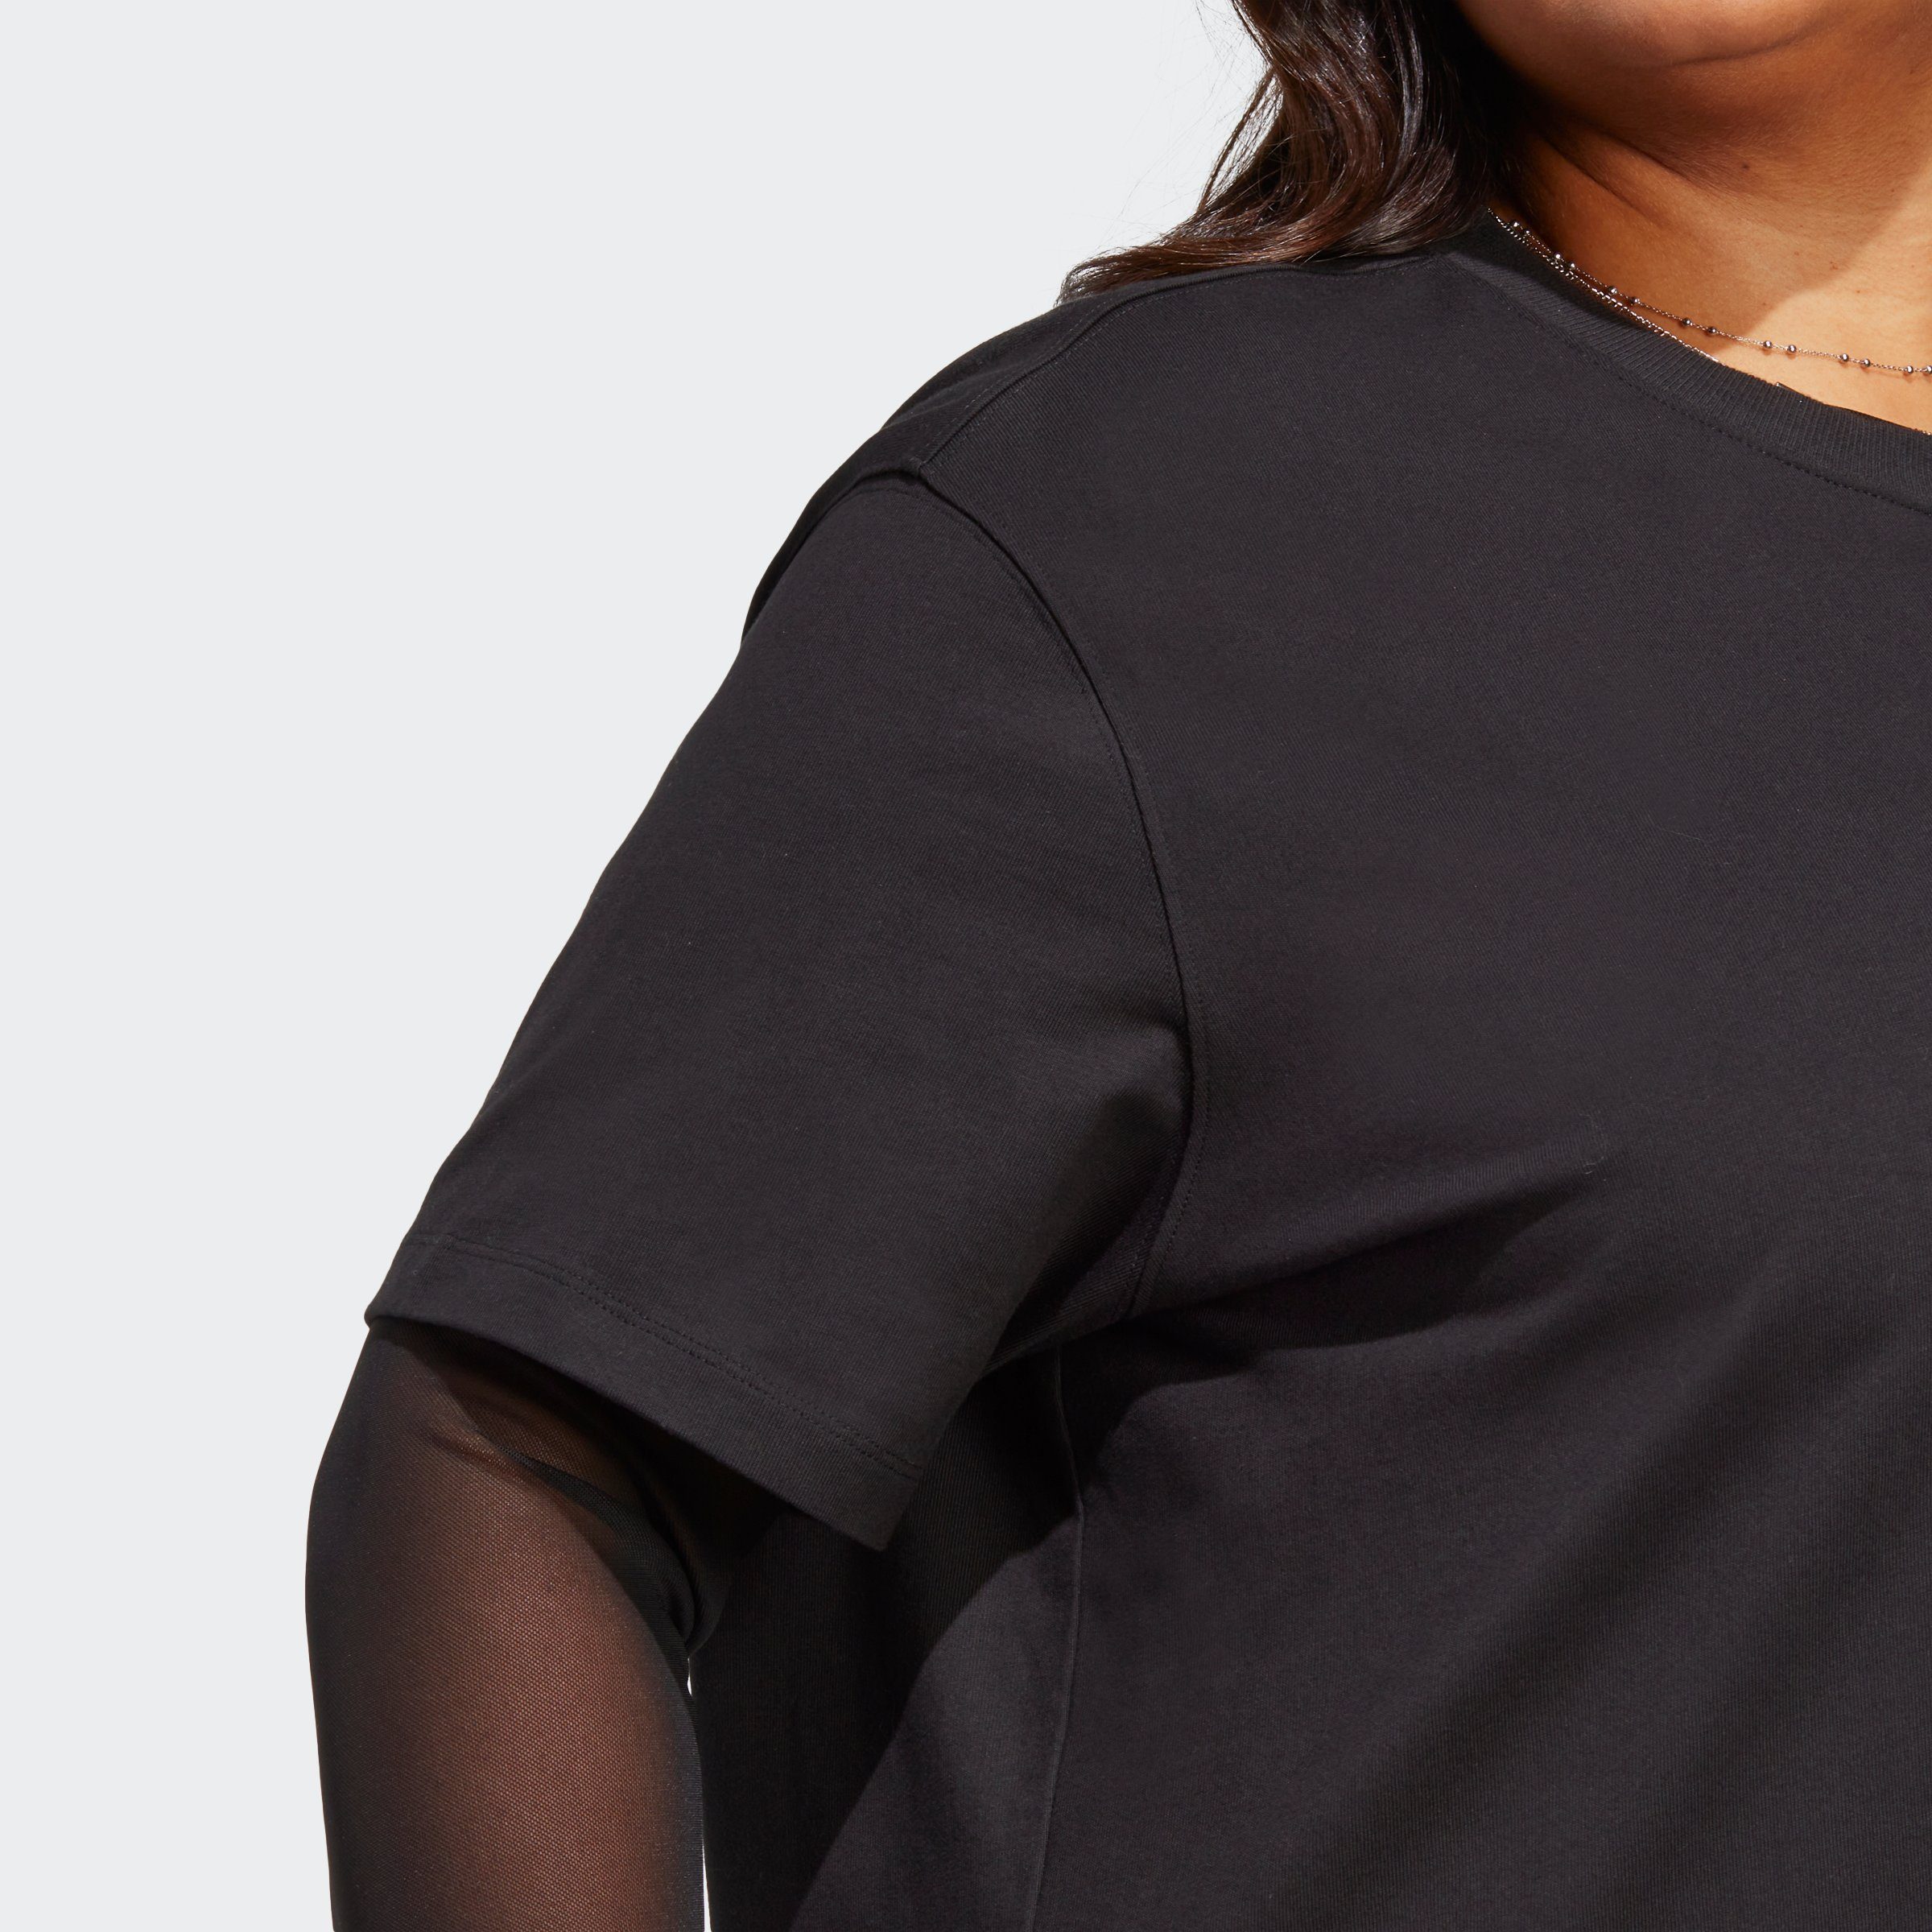 GROSSE Black Originals ADICOLOR – ESSENTIALS T-Shirt GRÖSSEN adidas